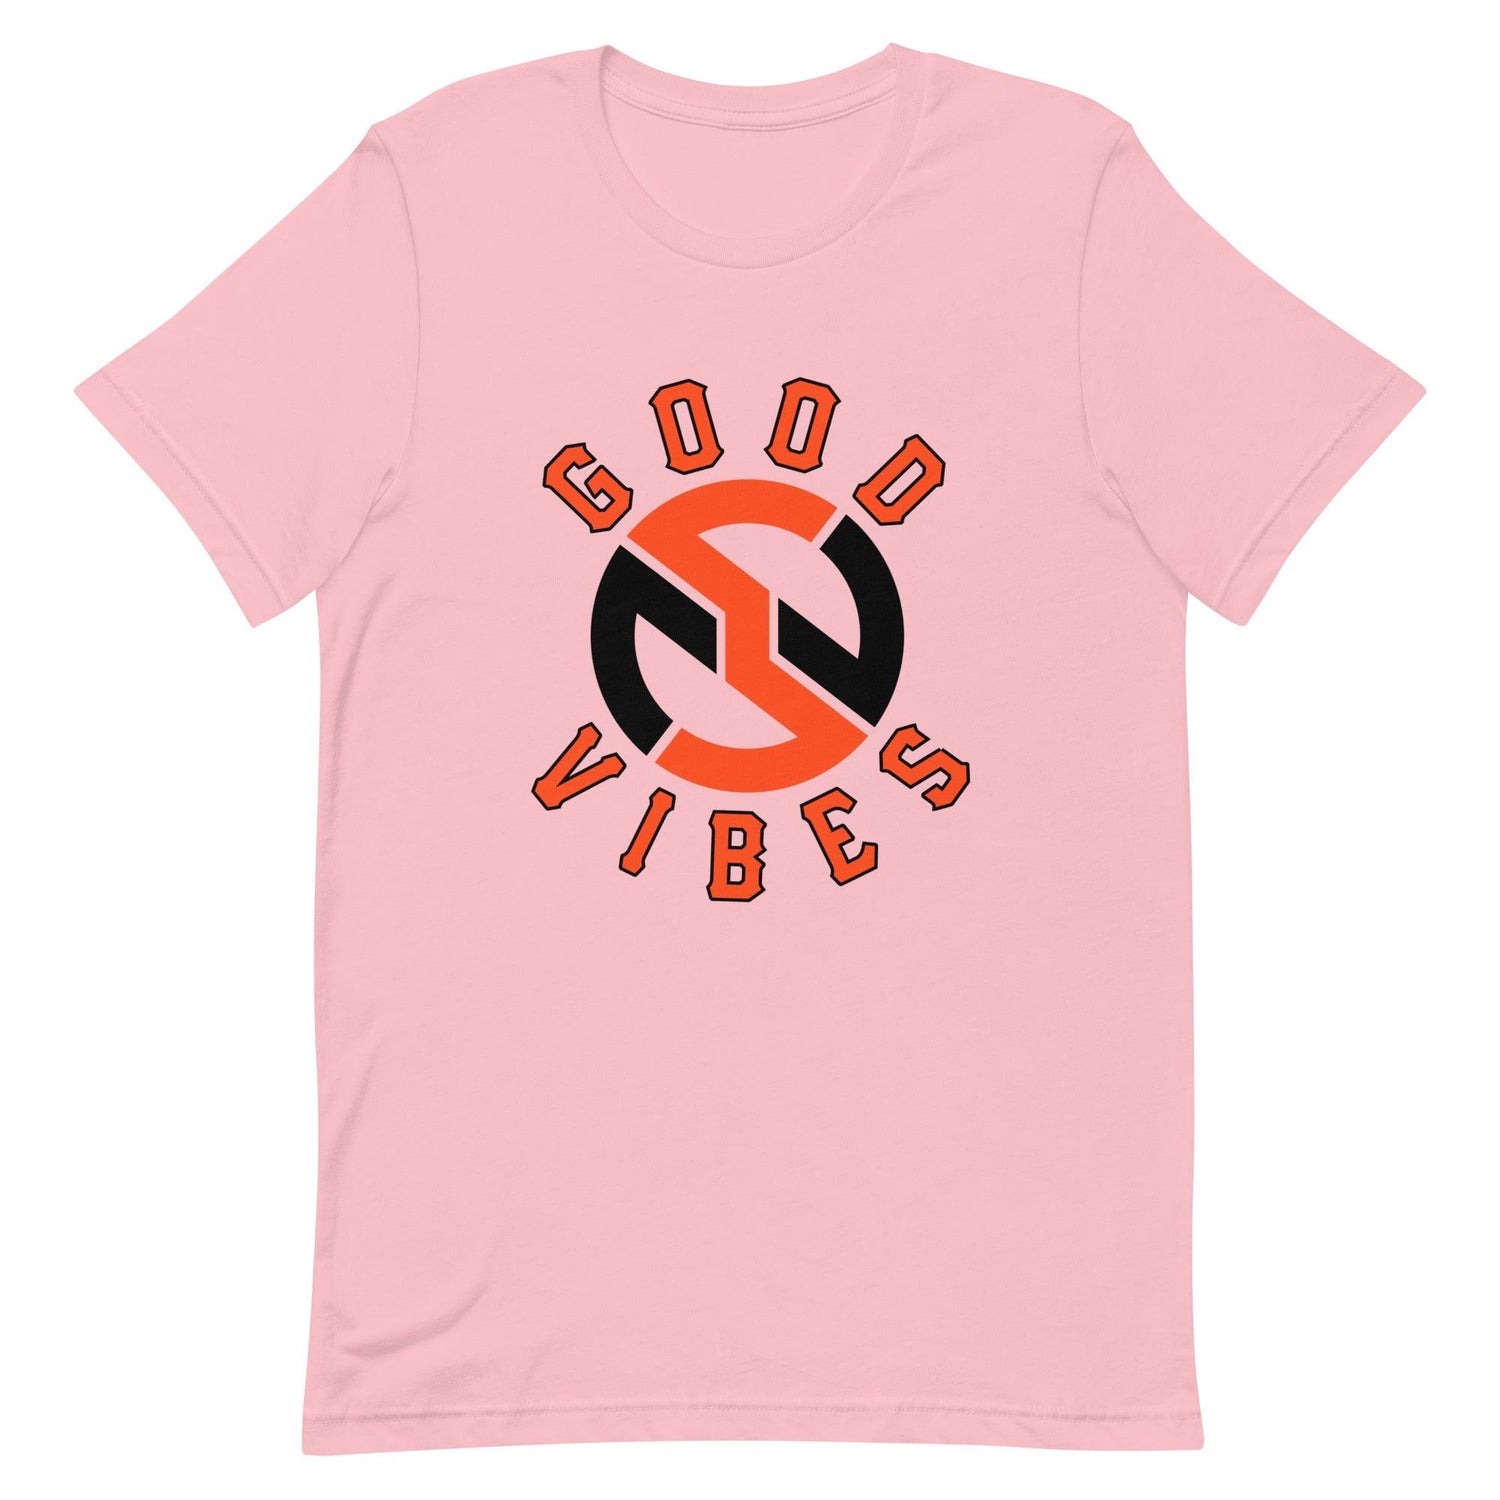 Nick Swiney “Statement” t-shirt - Fan Arch